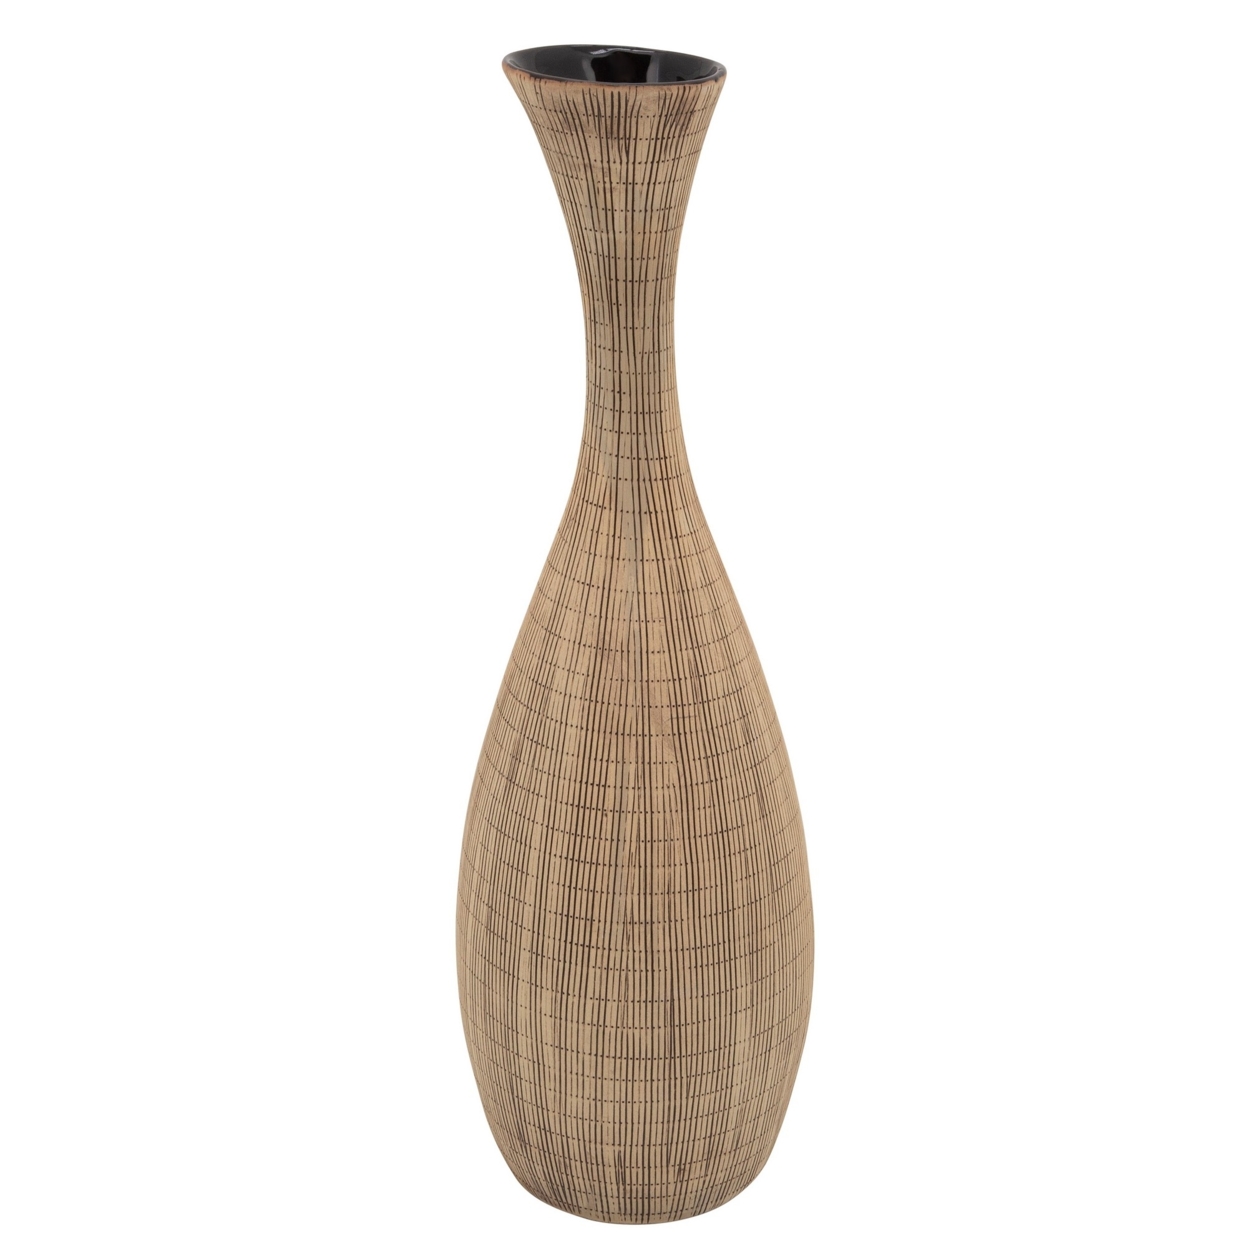 20'' Pot Bellied Shape Ceramic Vase With Sleek Flared Neck, Beige- Saltoro Sherpi